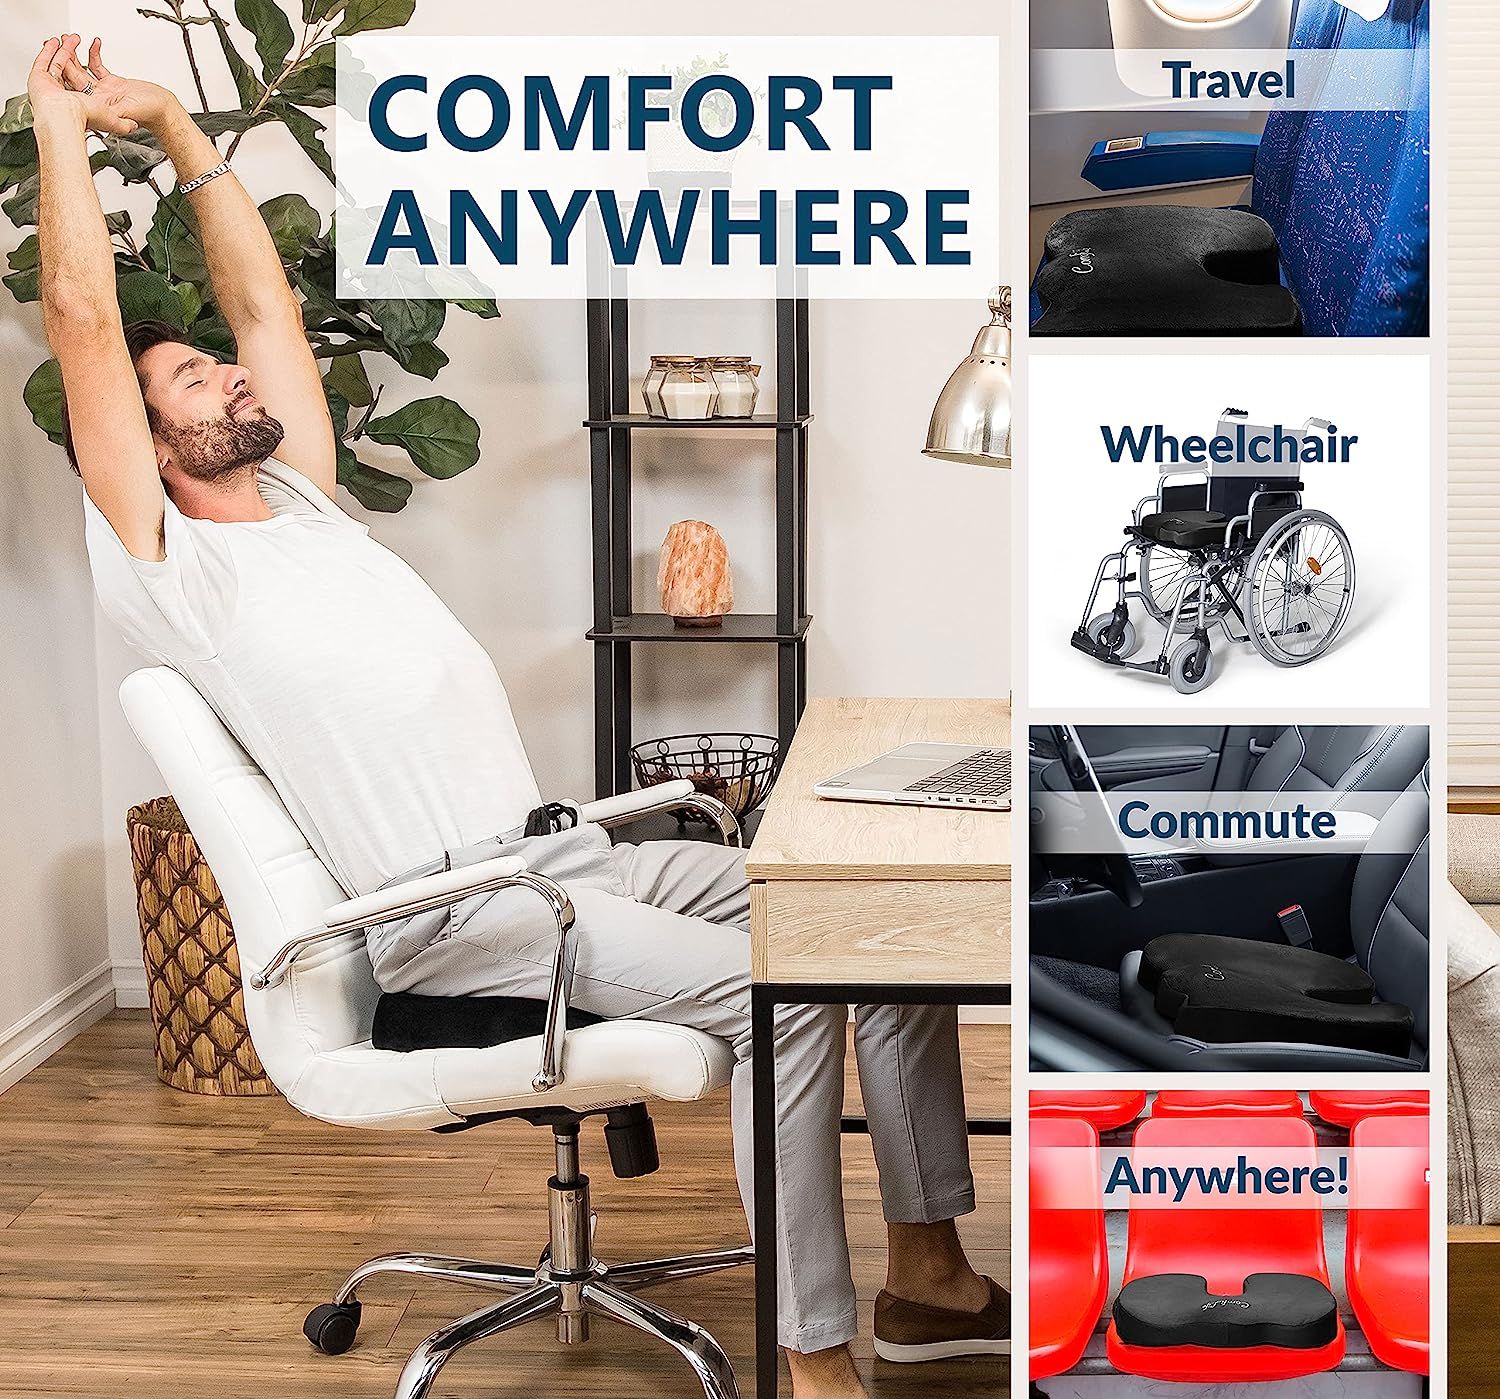 Orthopedic Cusion, Office Chair Cushion for Butt, Tailbone, Sciatica, Coccyx & Back Pain Relief, Car Seat Cushion, Black